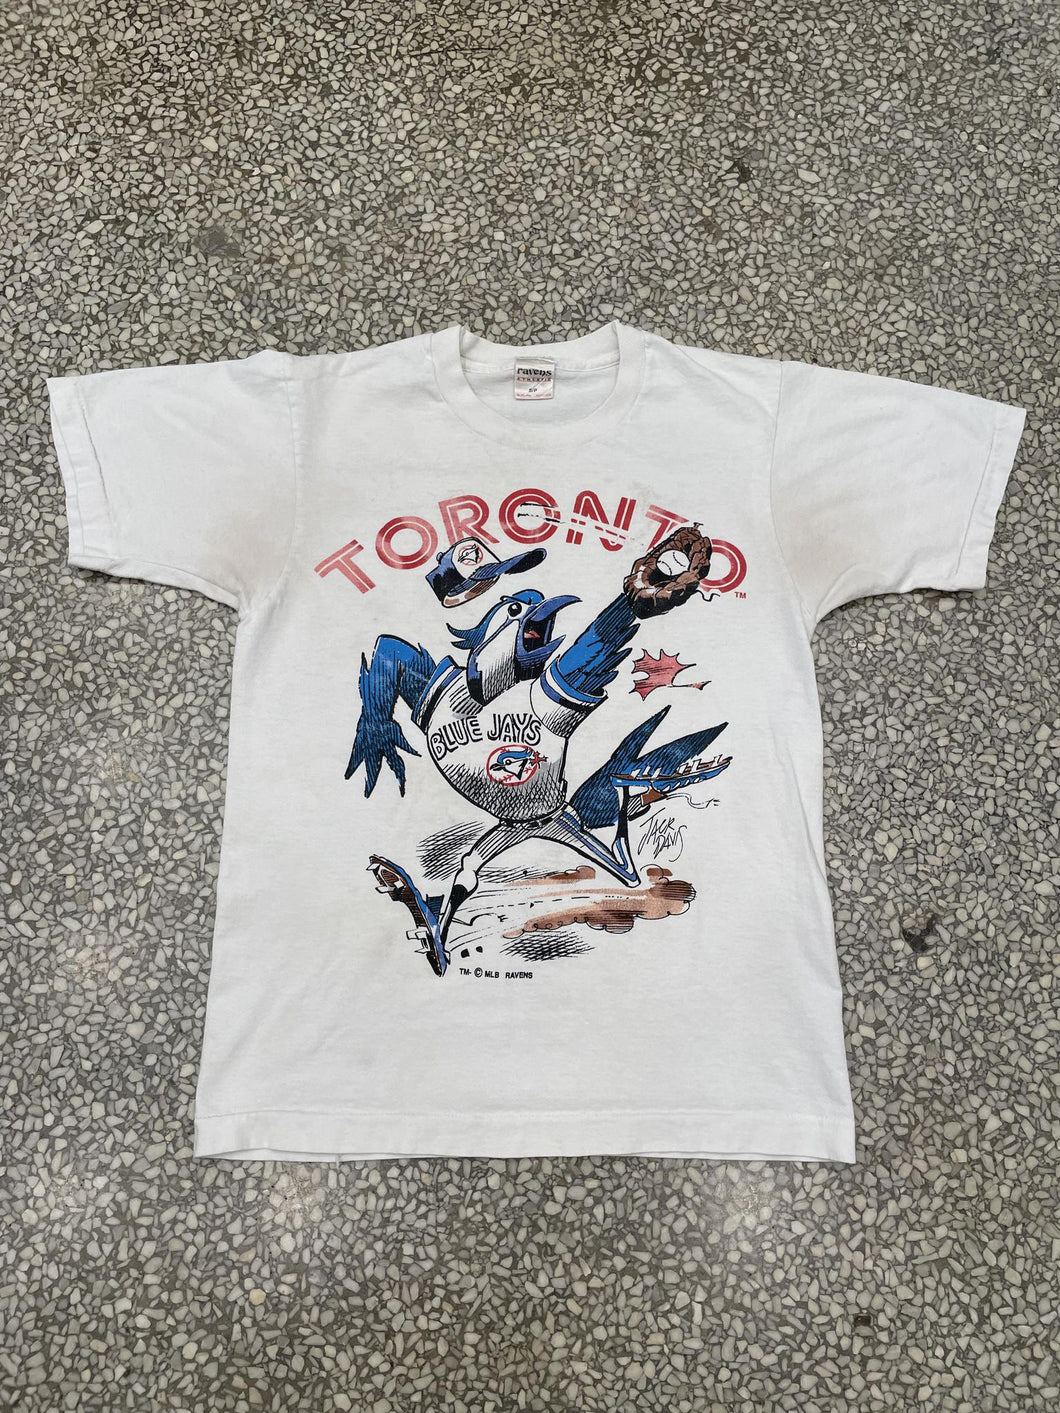 Toronto Blue Jays Vintage Shirt 